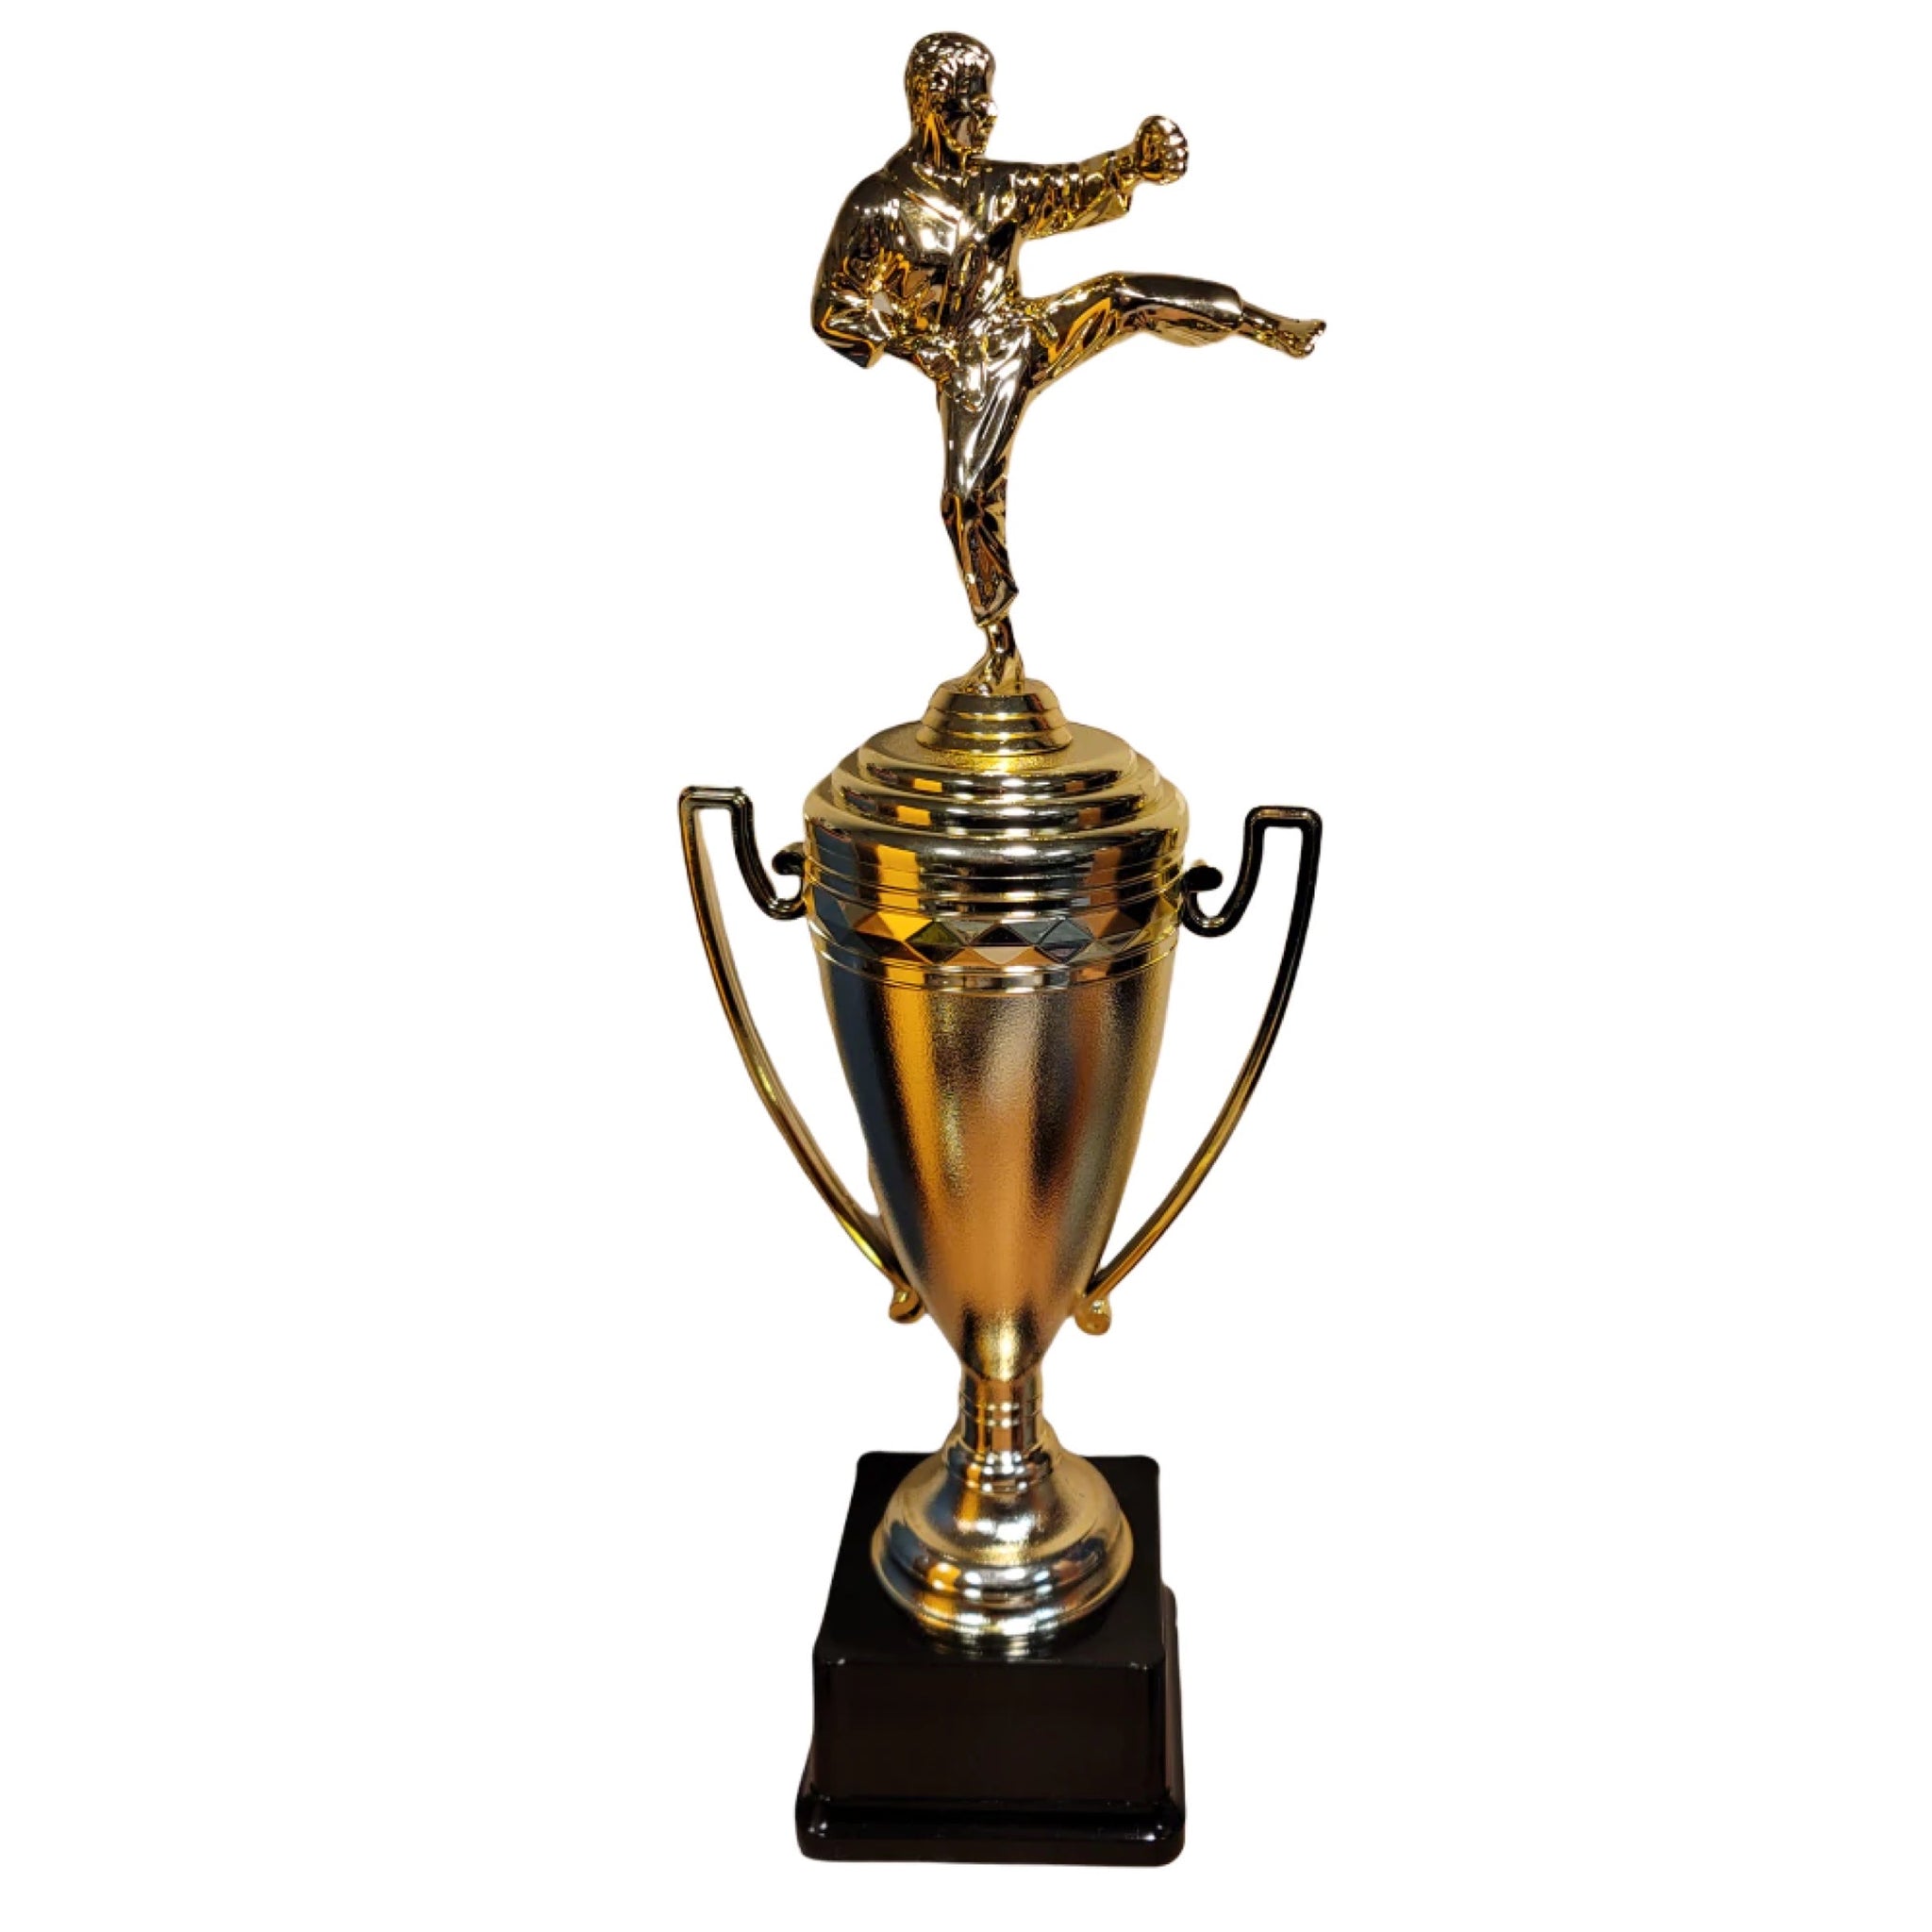 Kicking Karate Figure on Trophy Cup